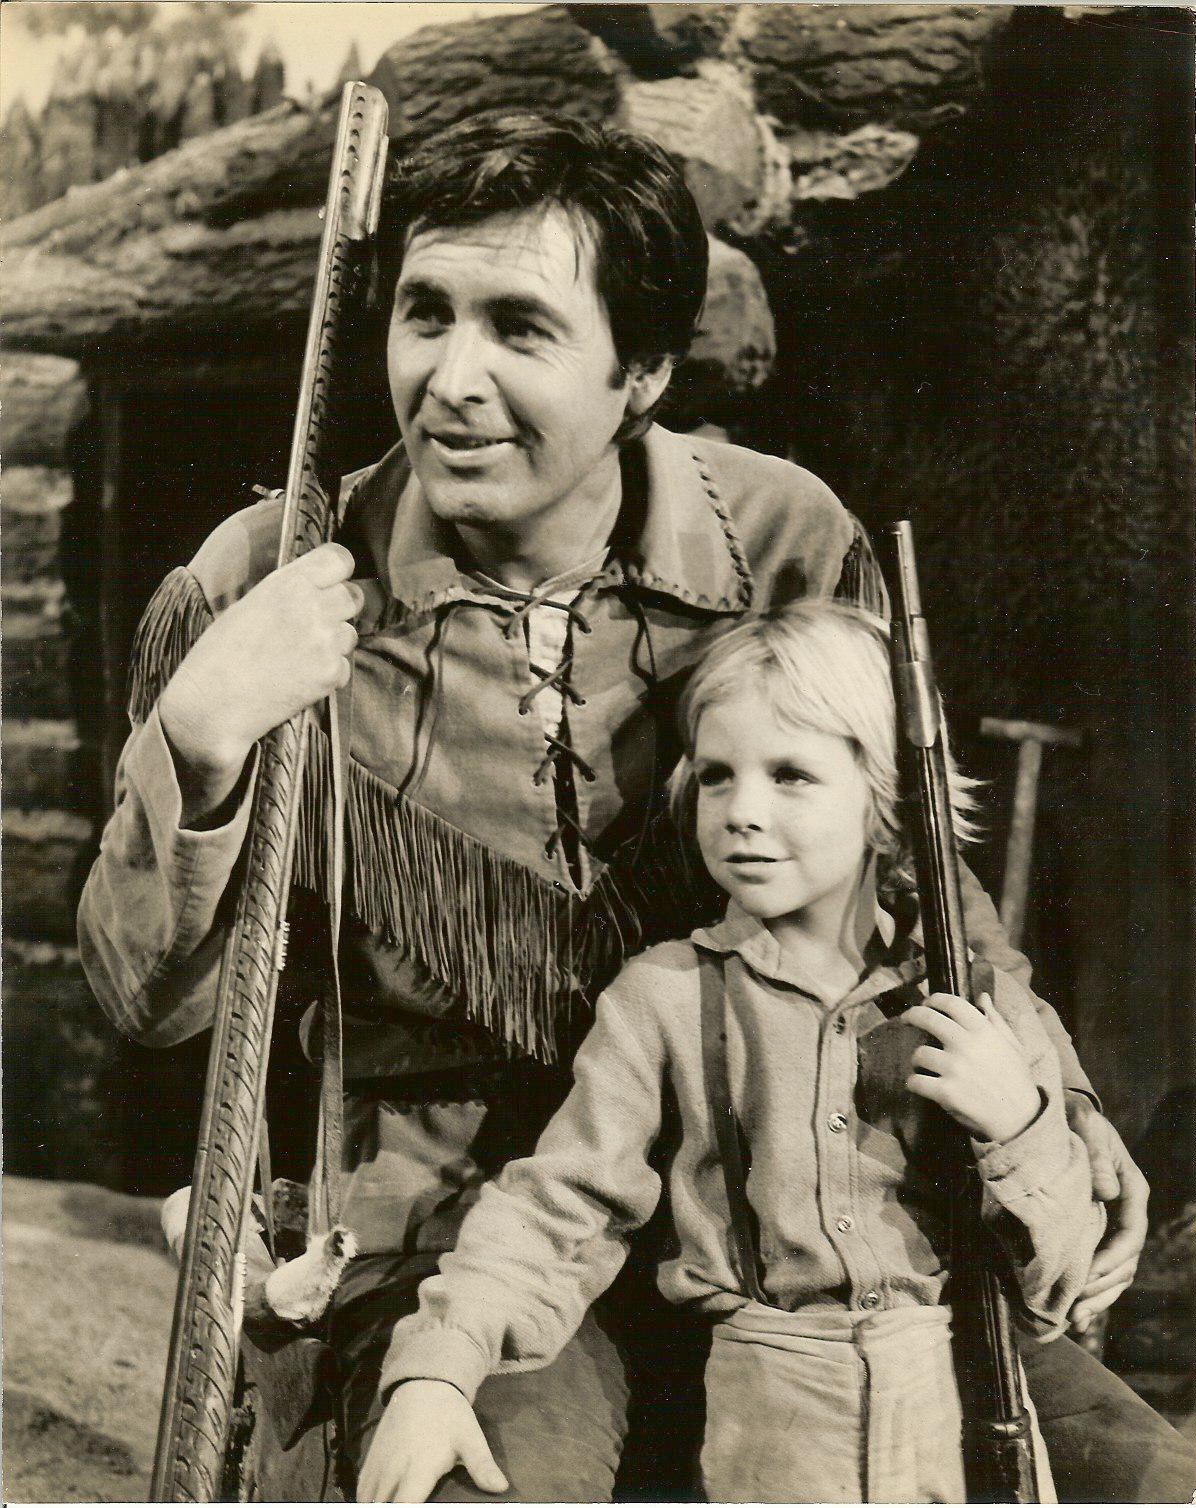 Darby Hinton & Fess Parker 'The Daniel Boone Show'